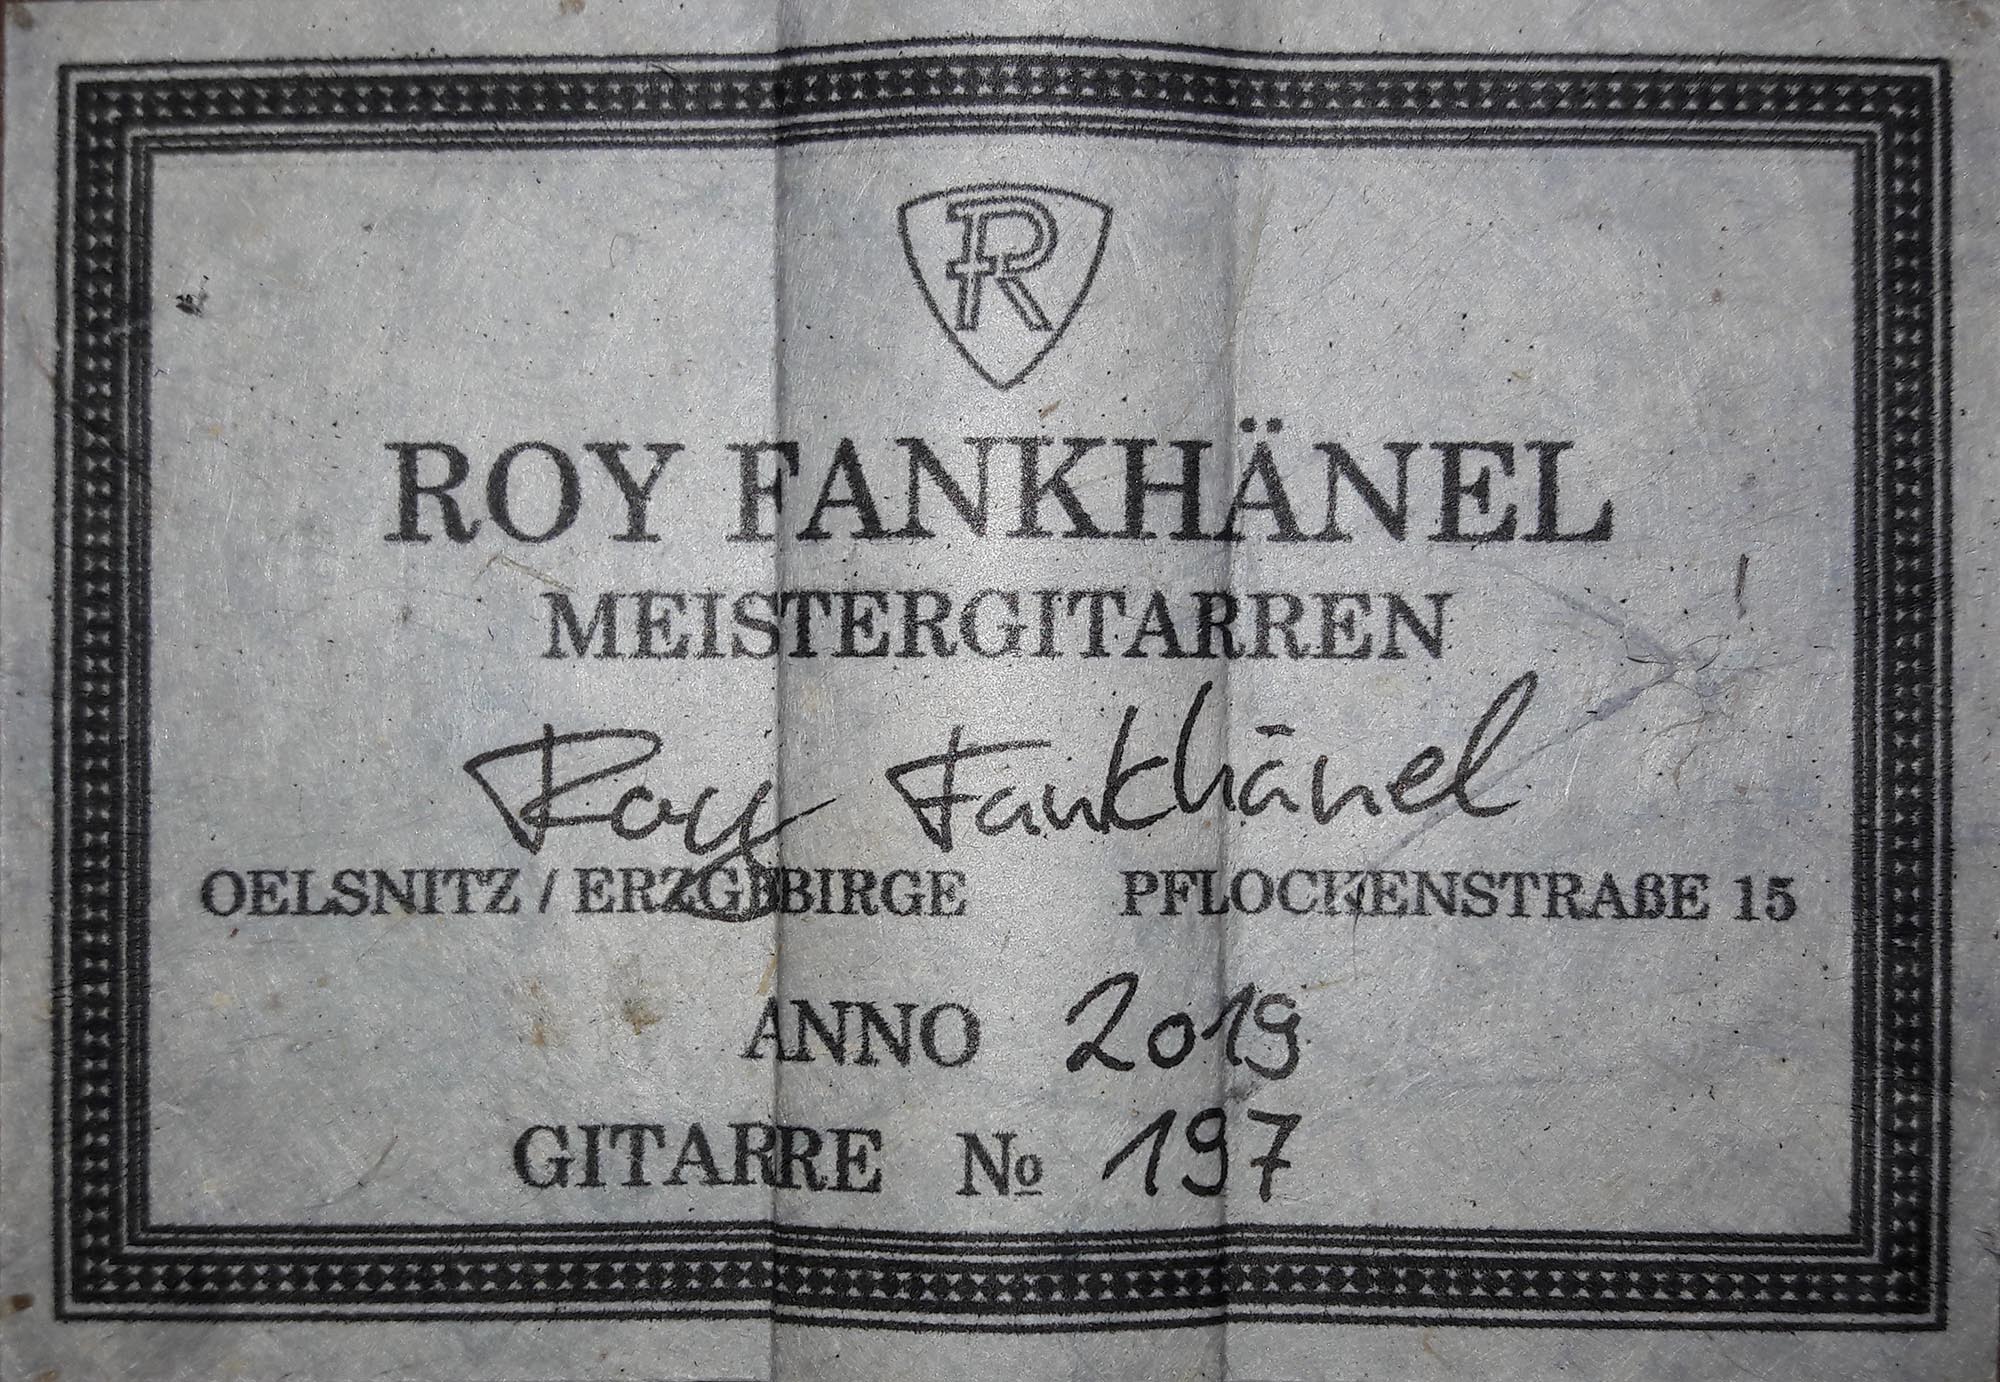 a royfankhänel RF197 18012019 label